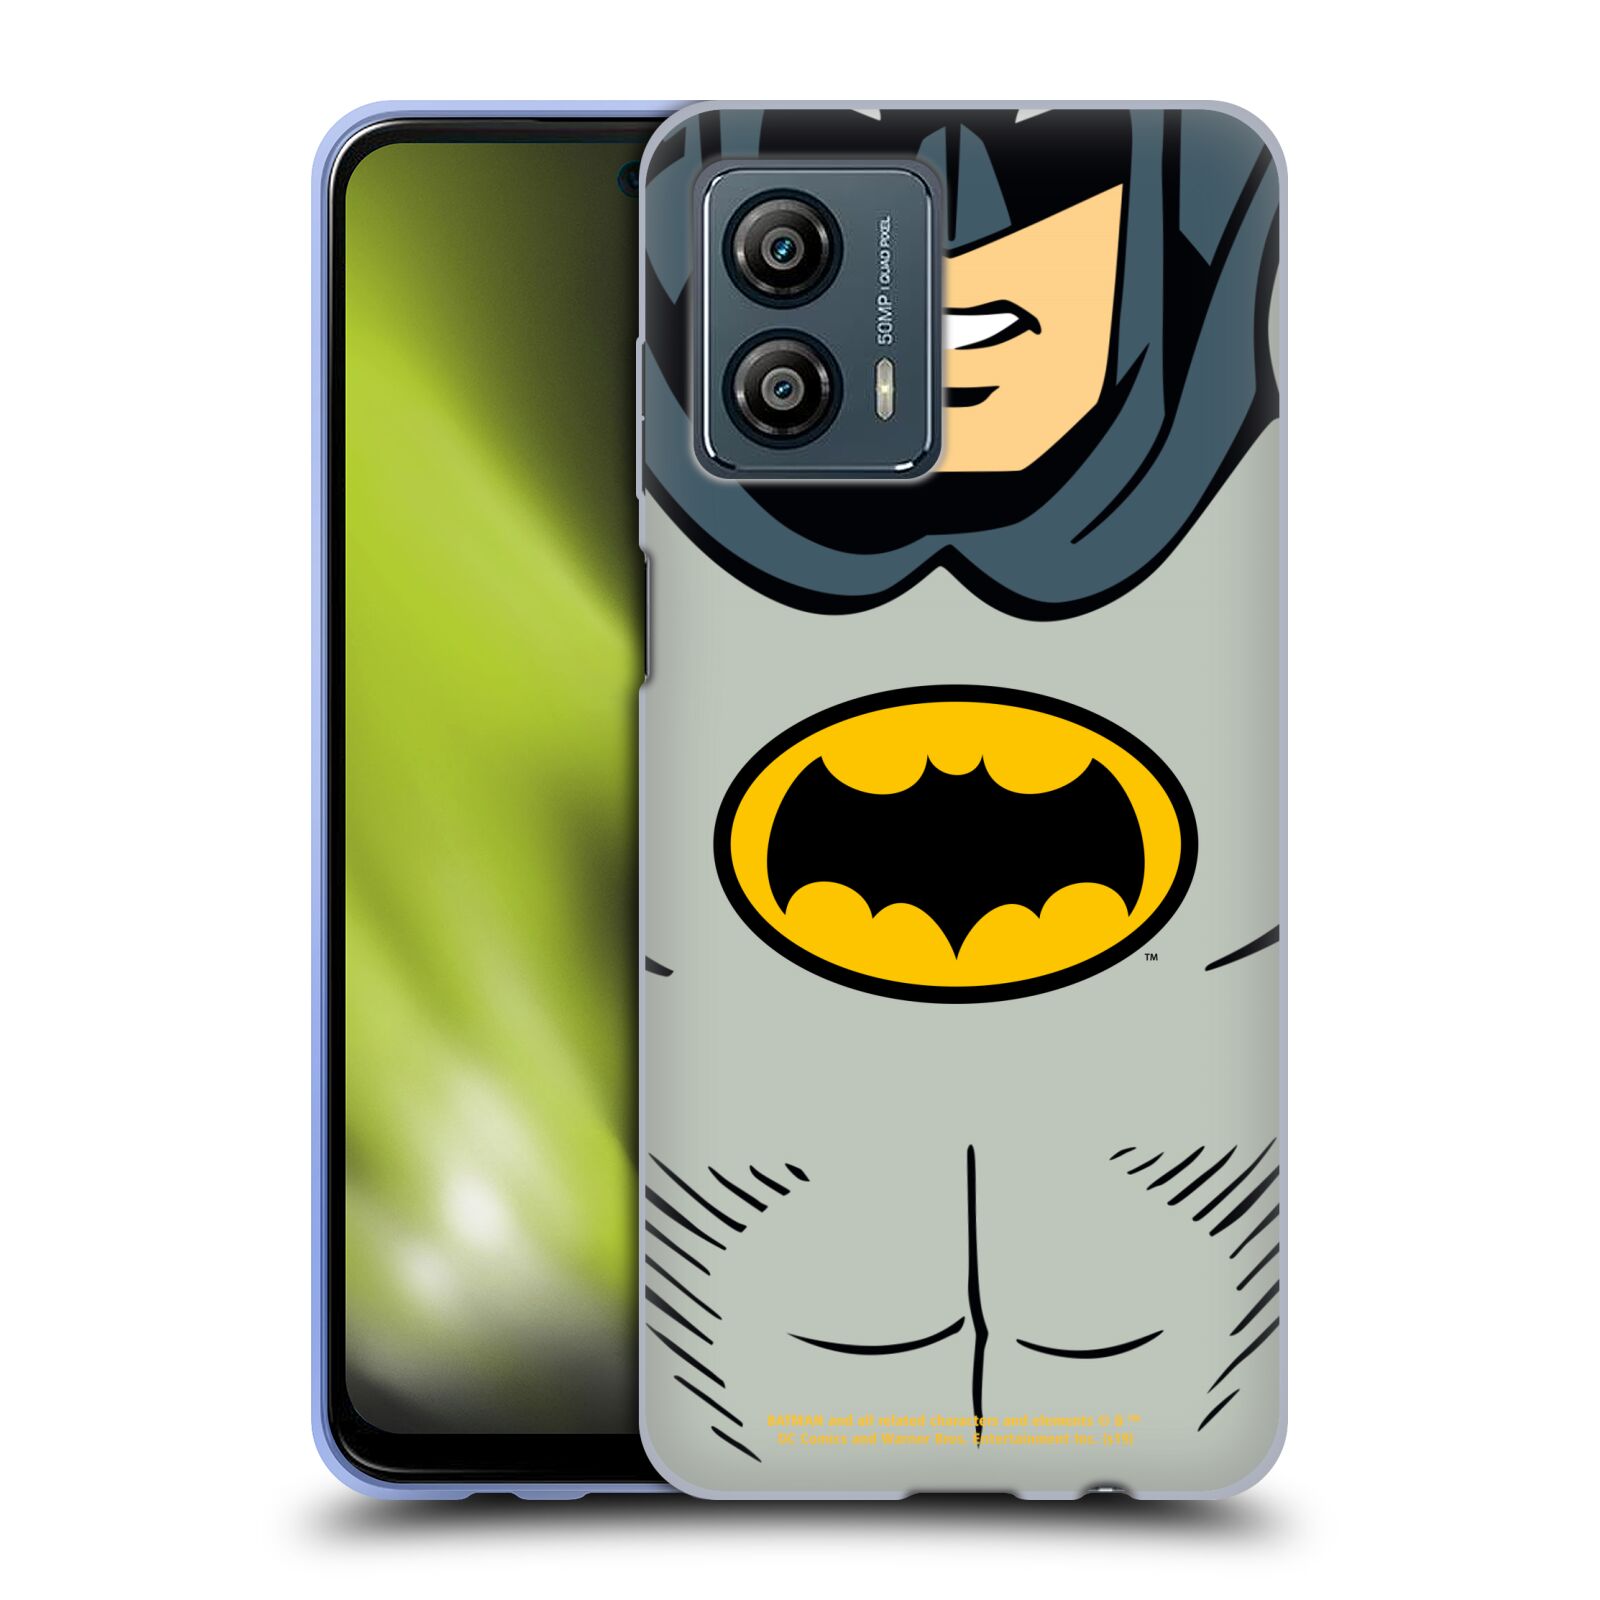 Silikonové pouzdro na mobil Motorola Moto G53 5G - Batman (Silikonový kryt, obal, pouzdro na mobilní telefon Motorola Moto G53 5G s licencovaným motivem Batman)